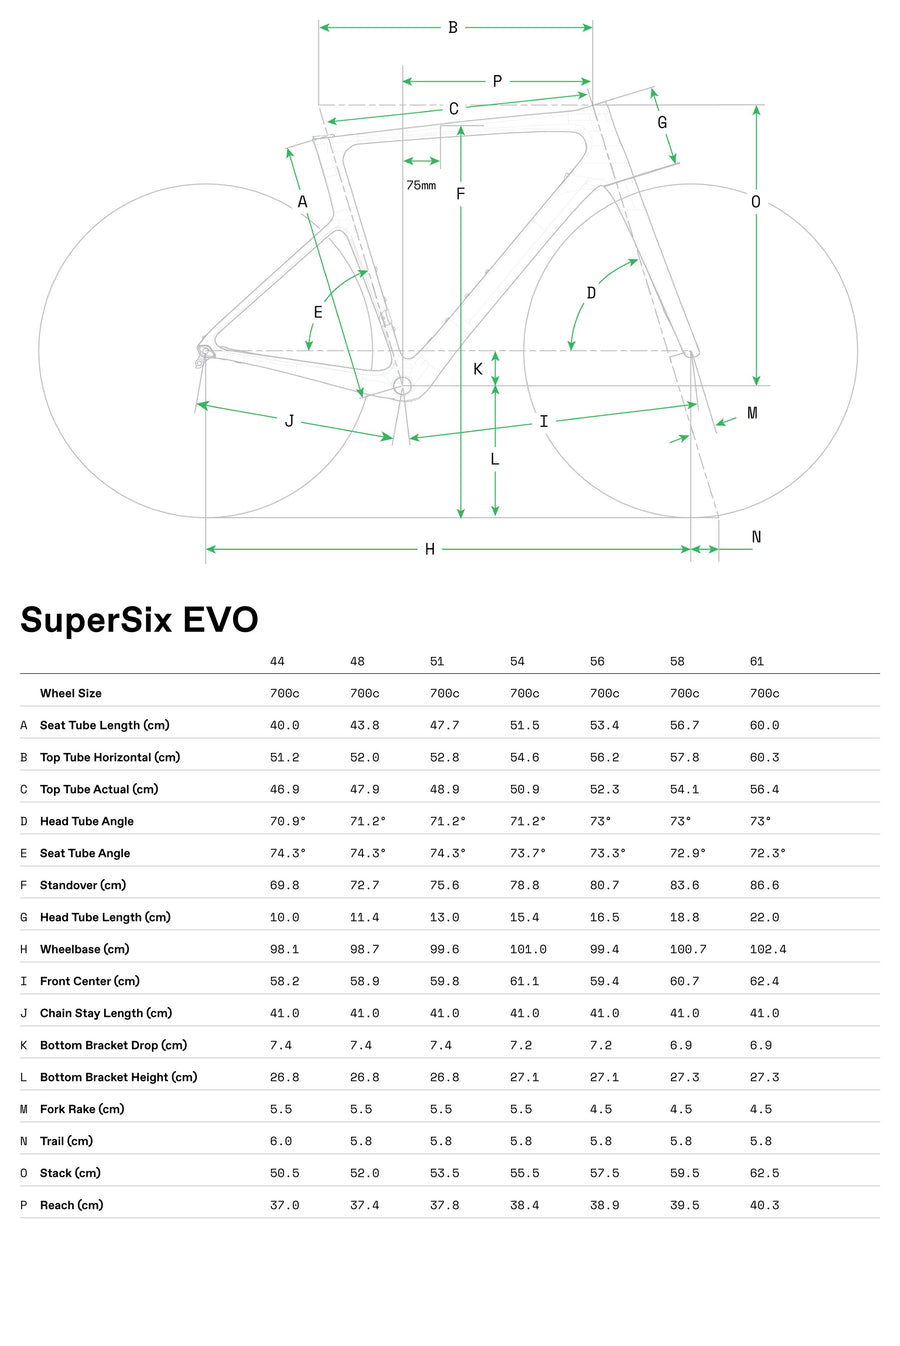 Cannondale SuperSix EVO 3 Road Bike - Viper Green